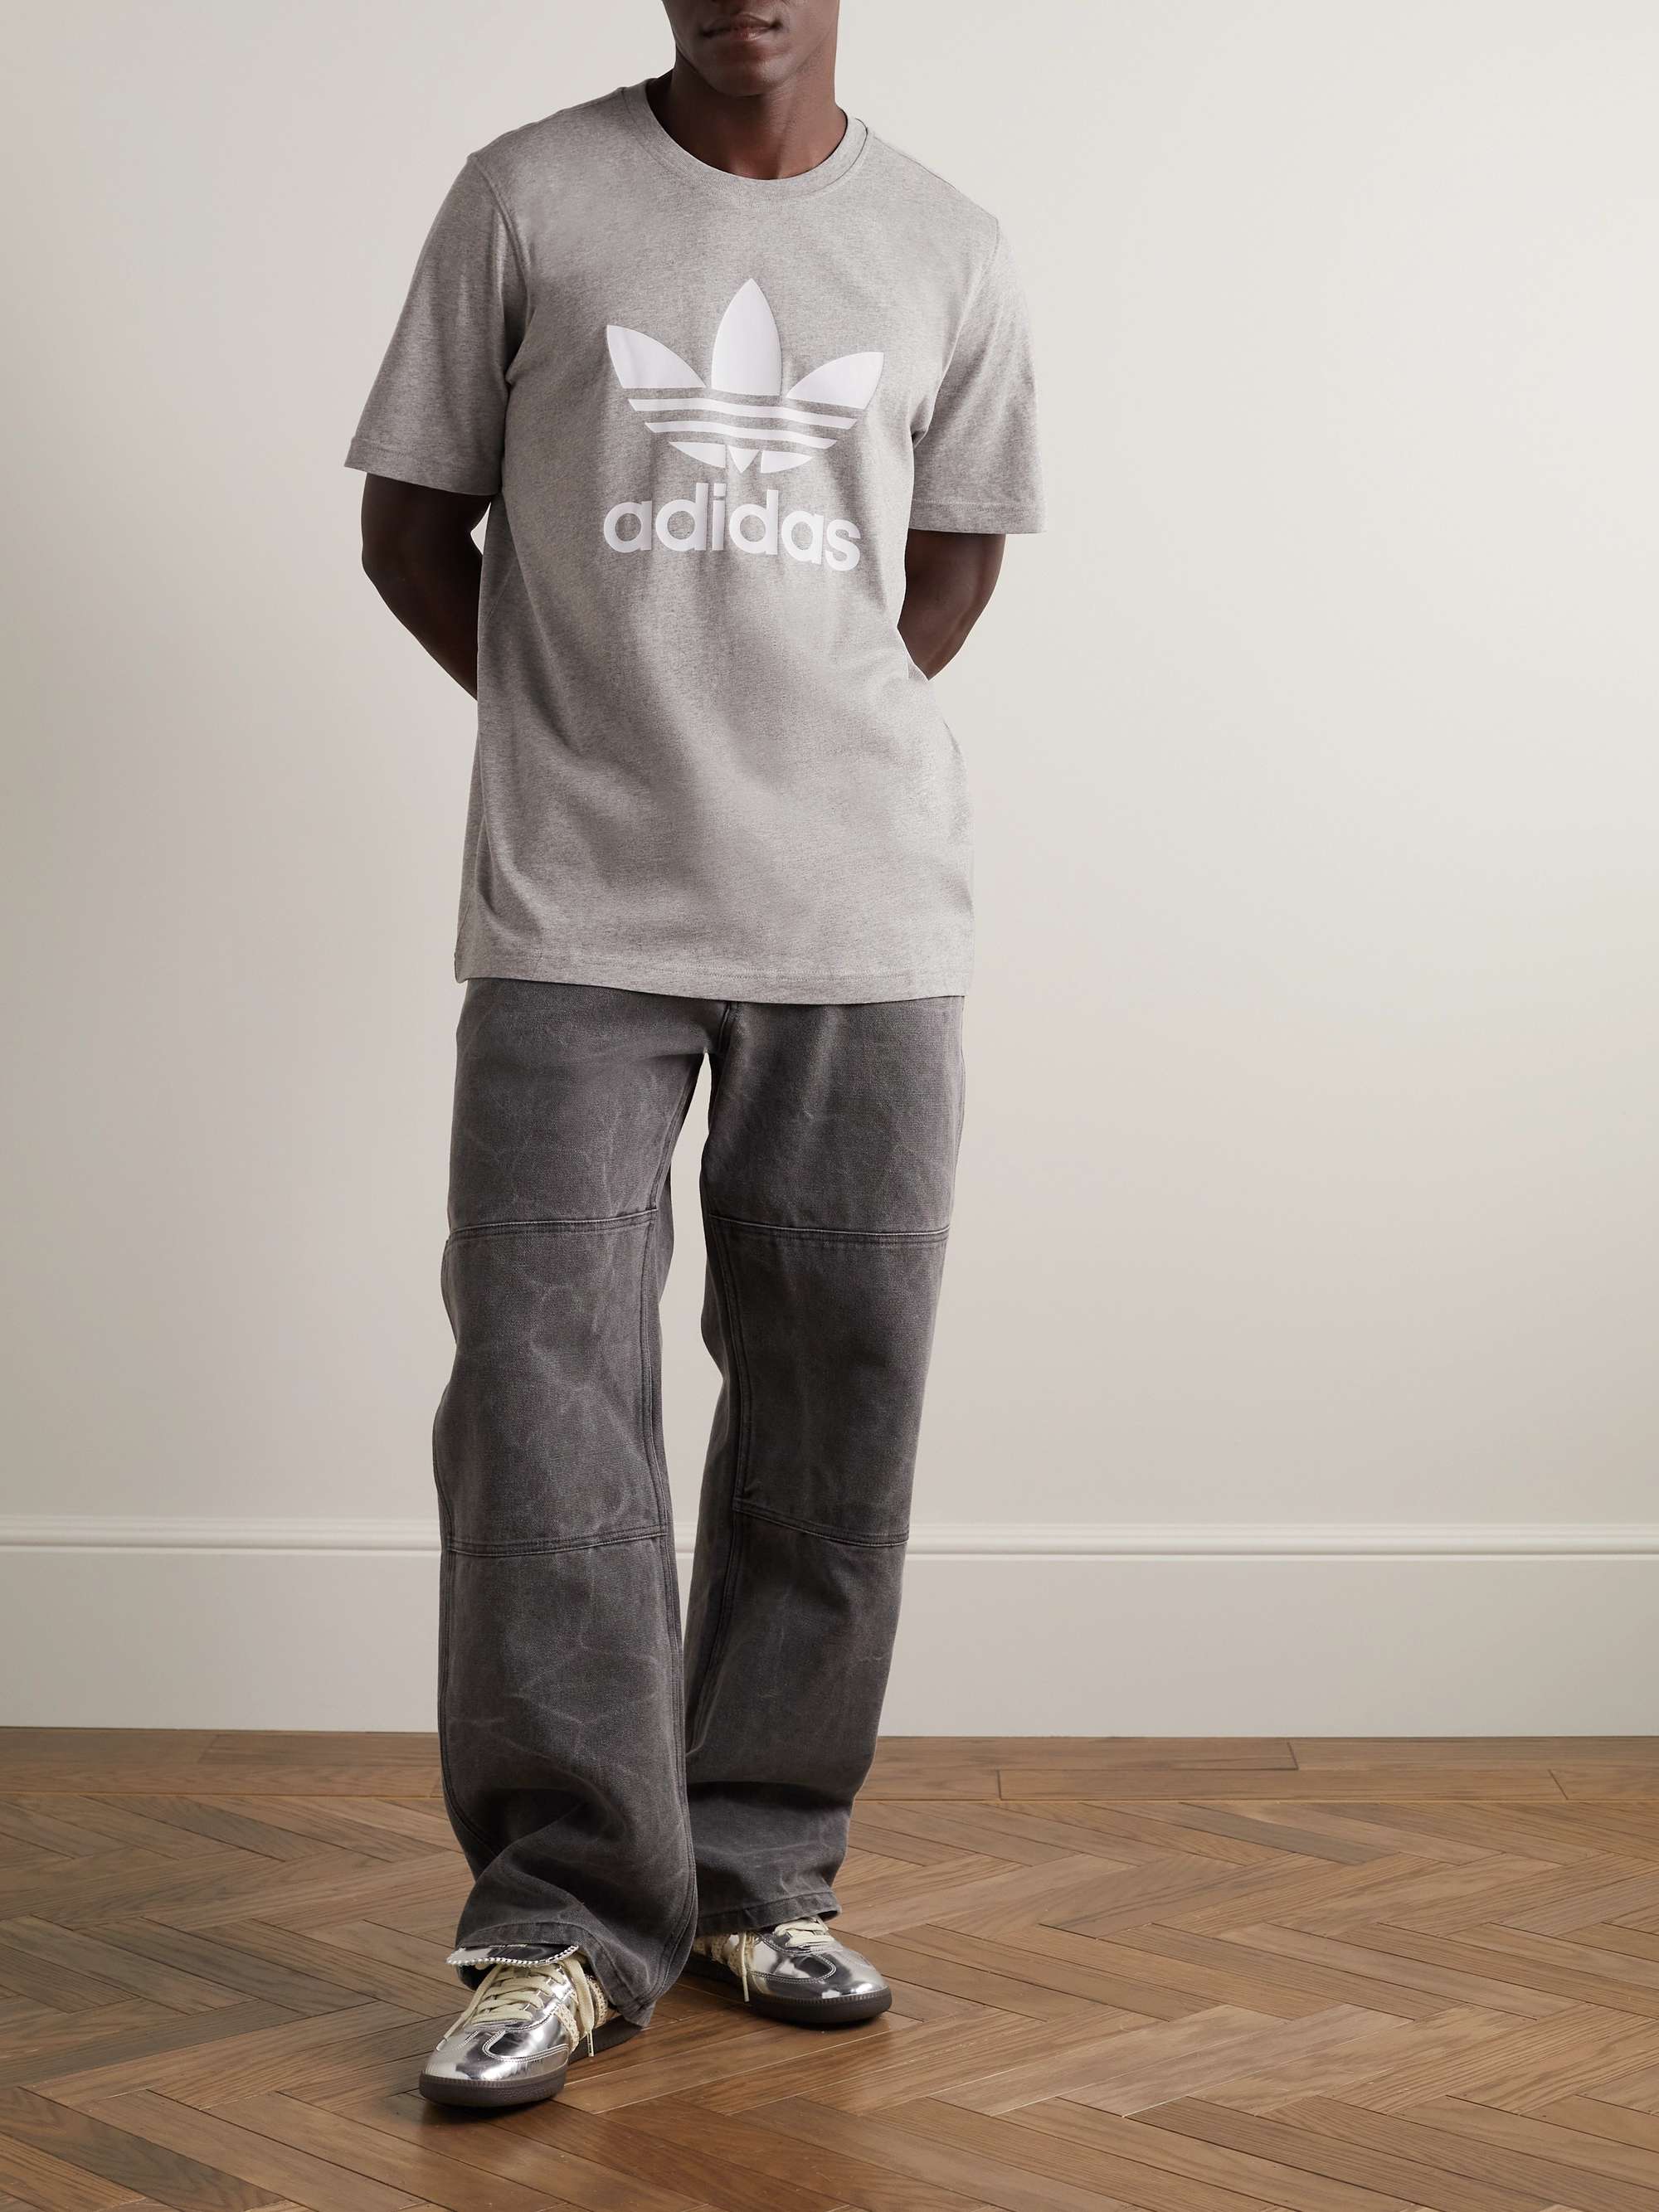 Cotton-Jersey | Logo-Print MR ADIDAS T-Shirt PORTER Men ORIGINALS for